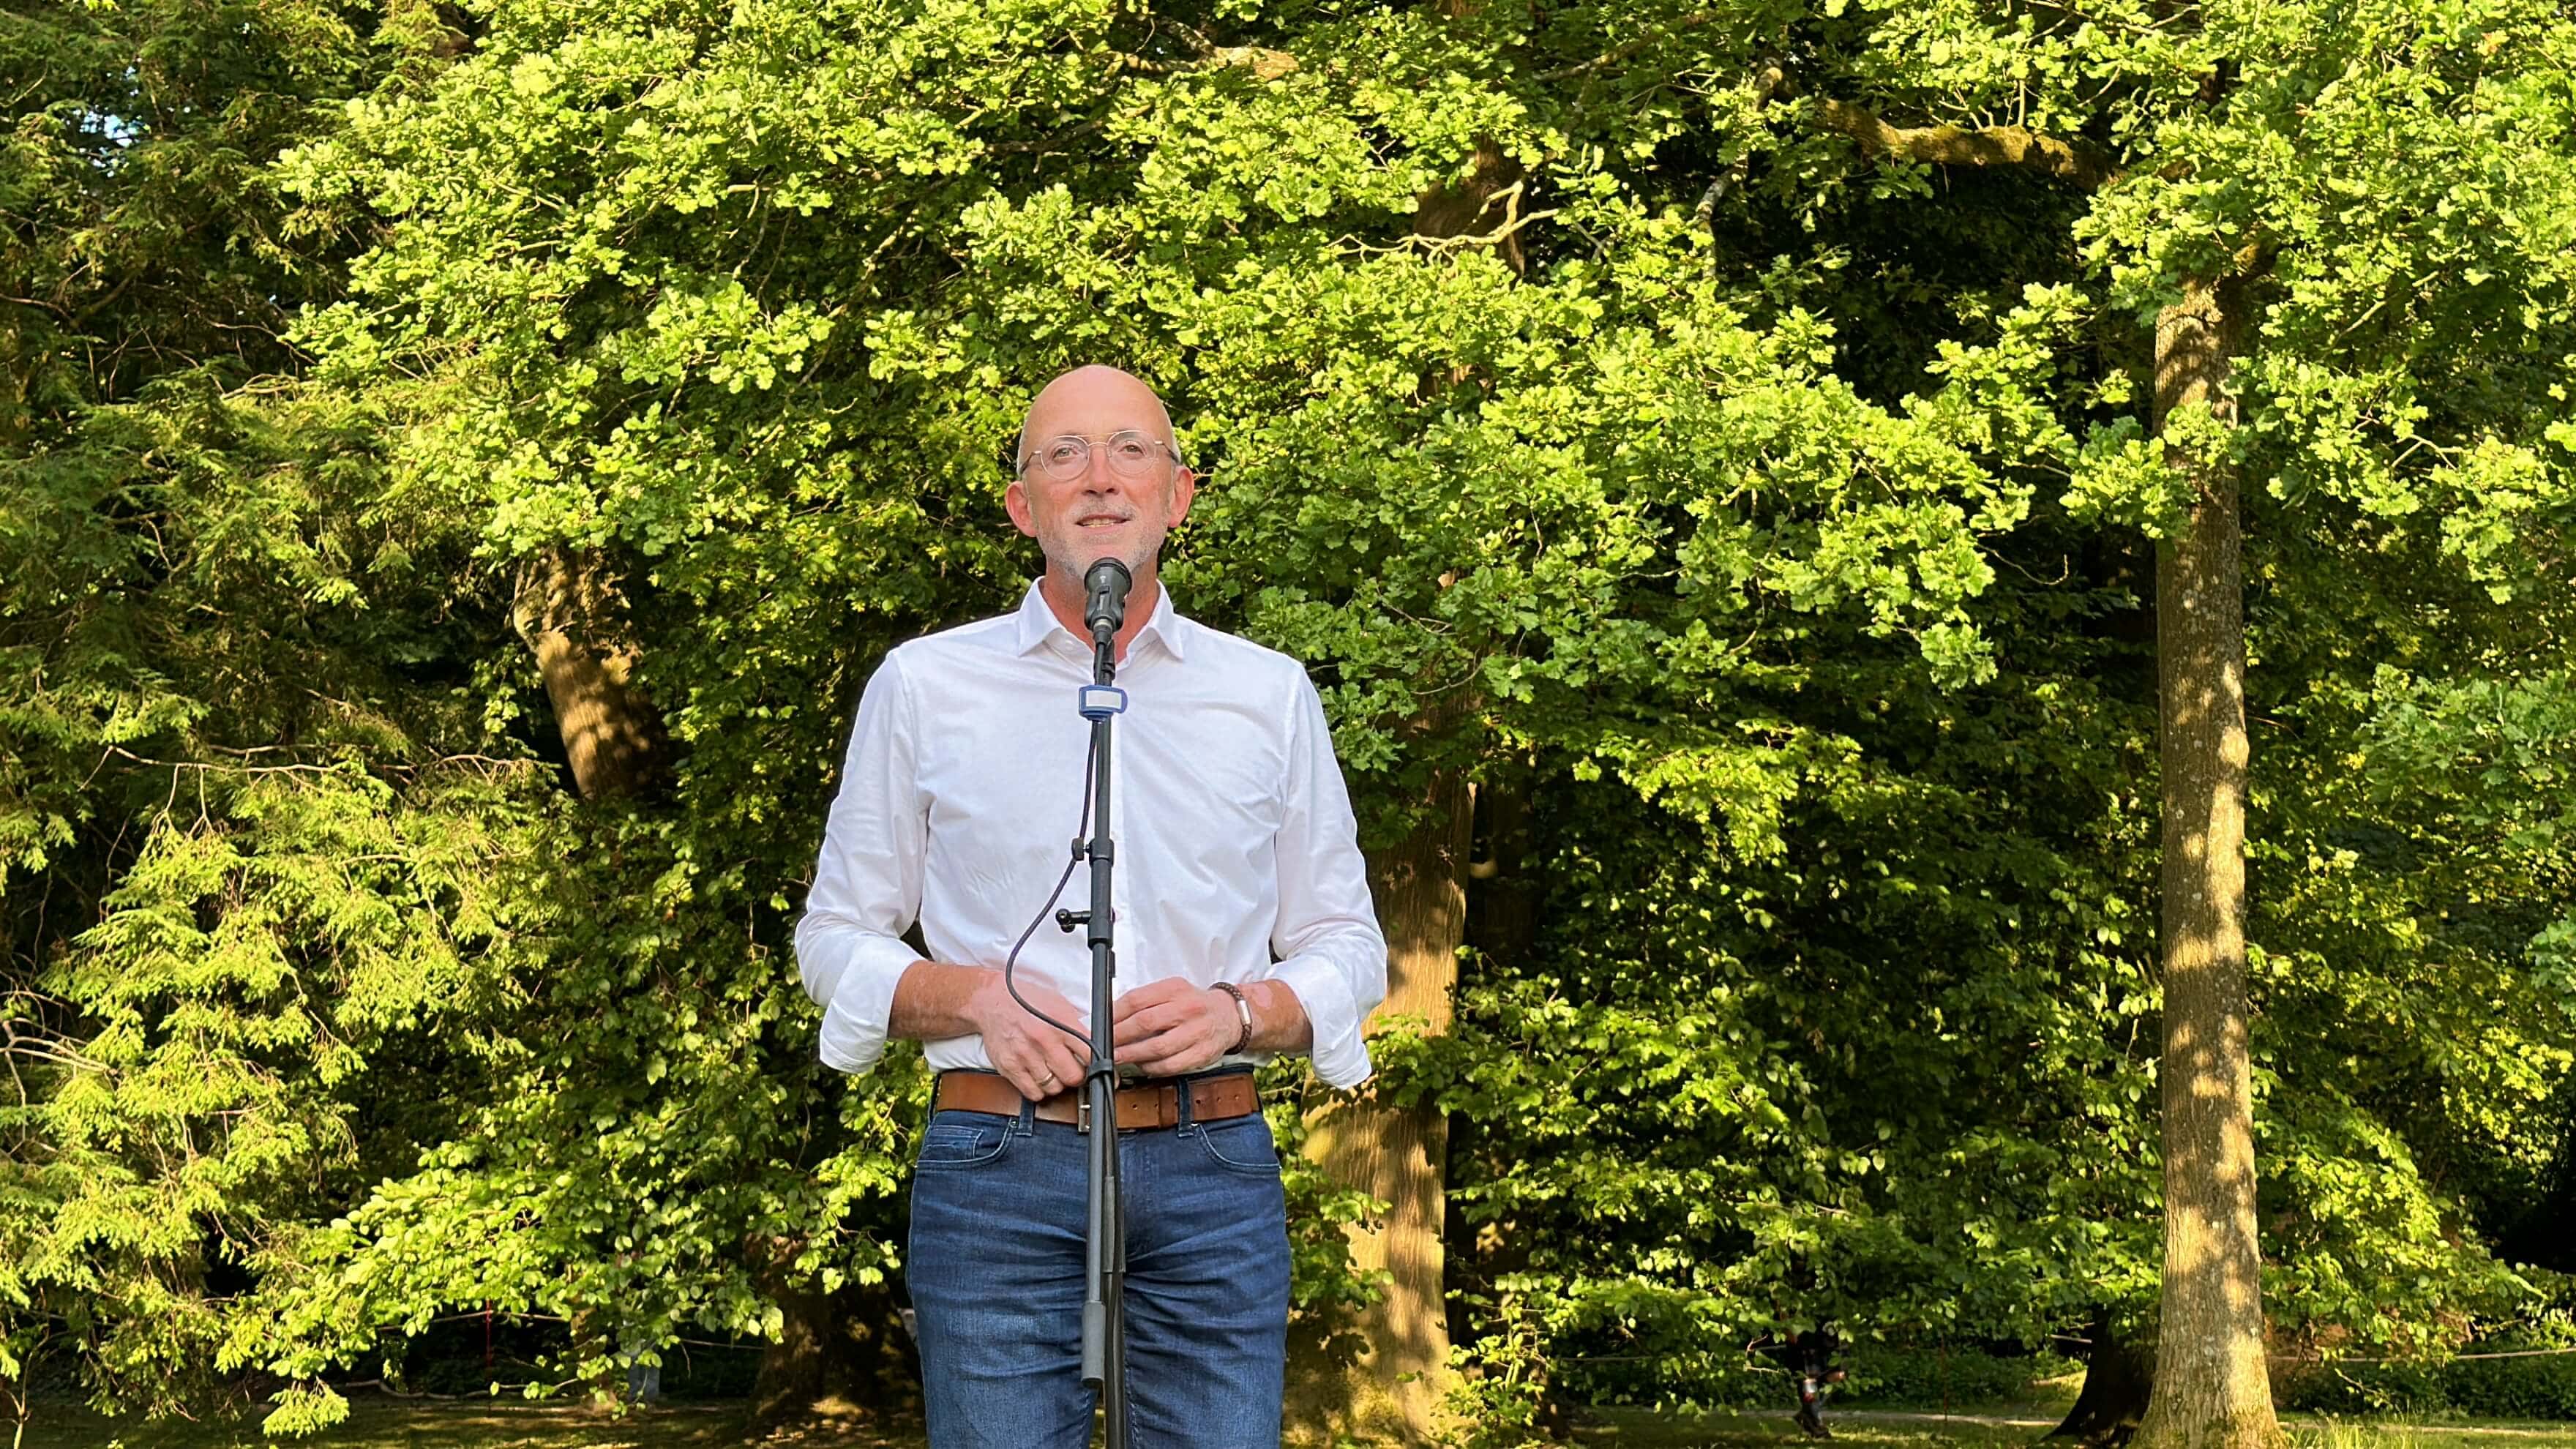 Macbeth im Schlosspark Weitmar: Begrüßung durch Bezirksbürgermeister Marc Gräf (SPD)